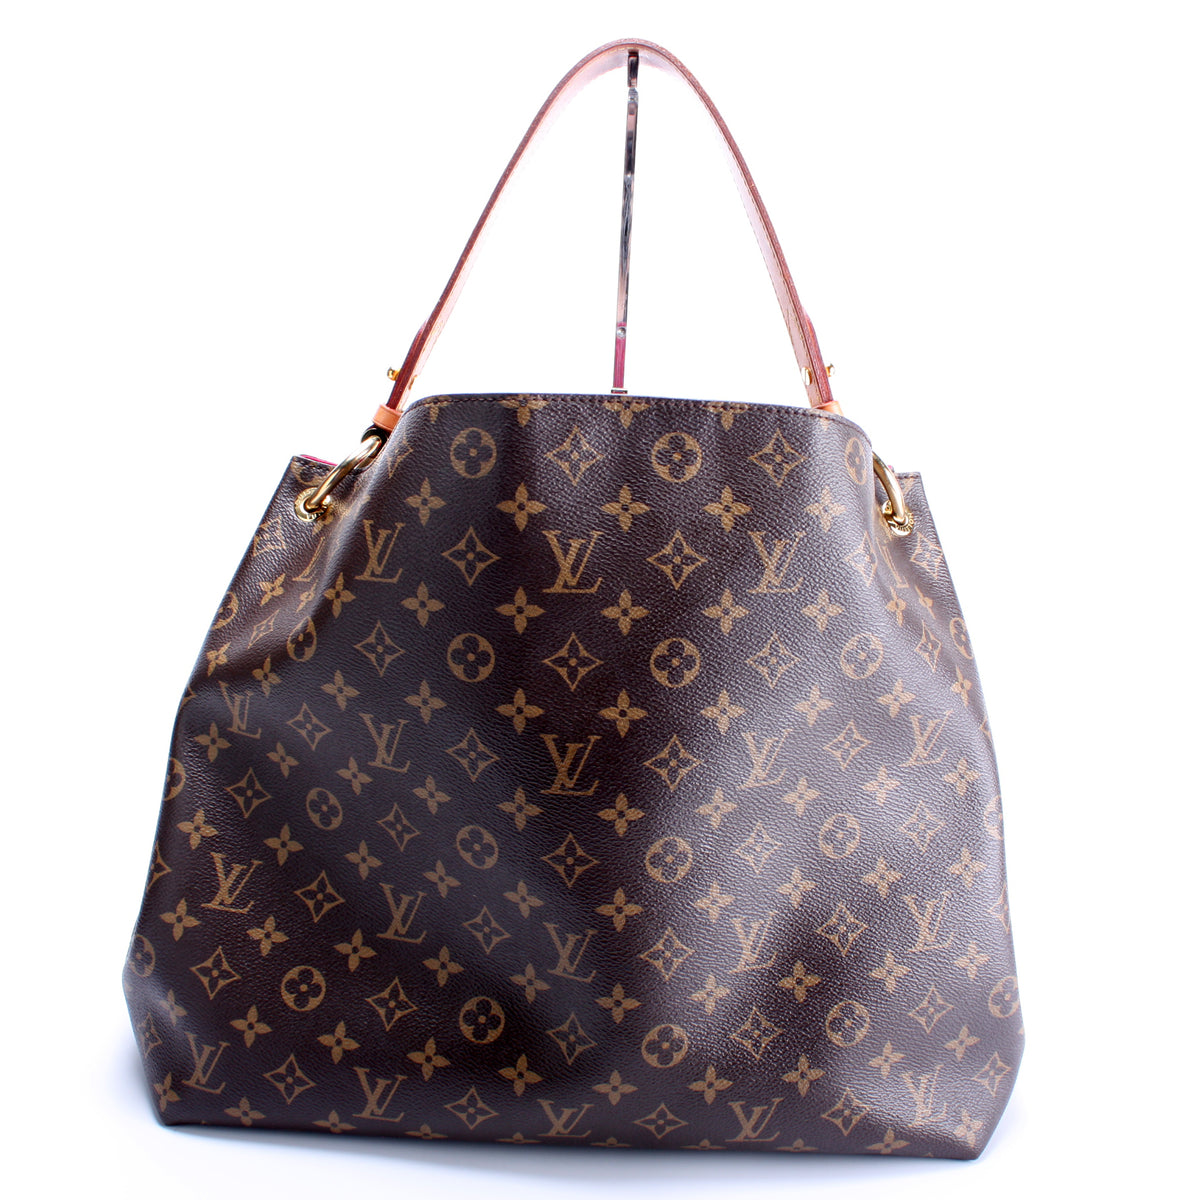 Louis Vuitton - Authenticated Handbag - Glitter Purple Plain for Women, Never Worn